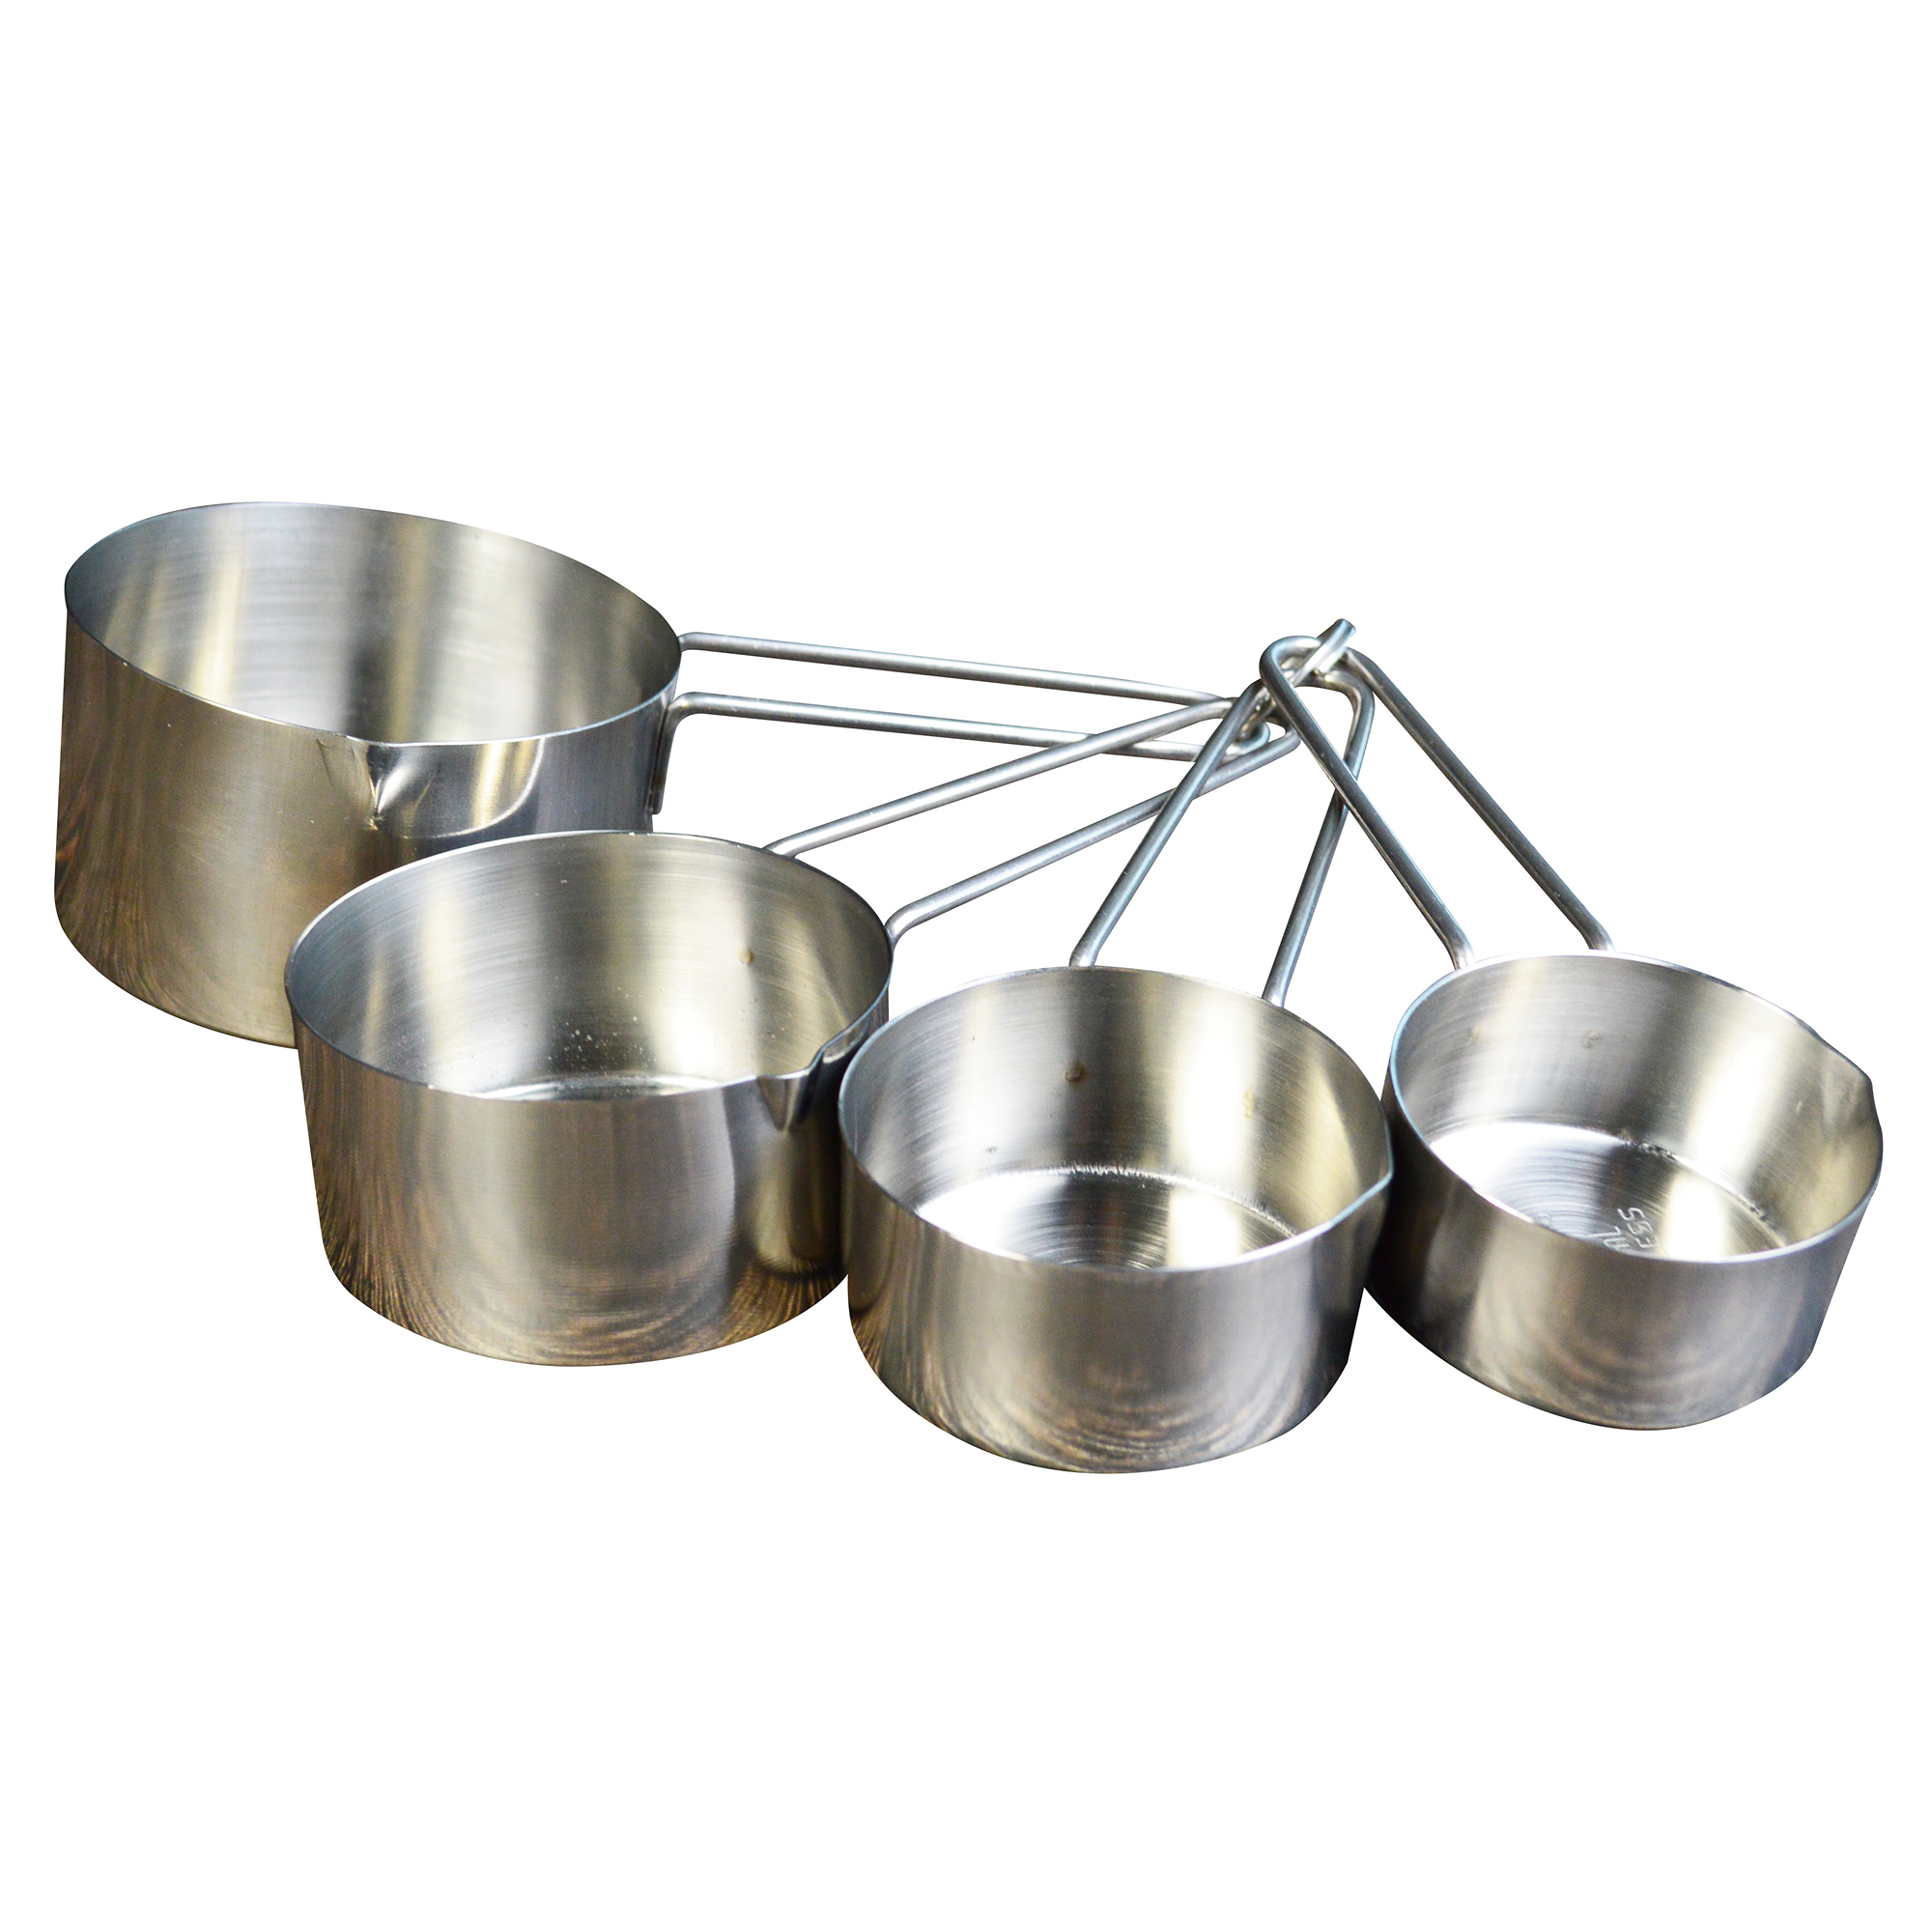 HC1813910 - Metal Measuring Cups - Pack of 4